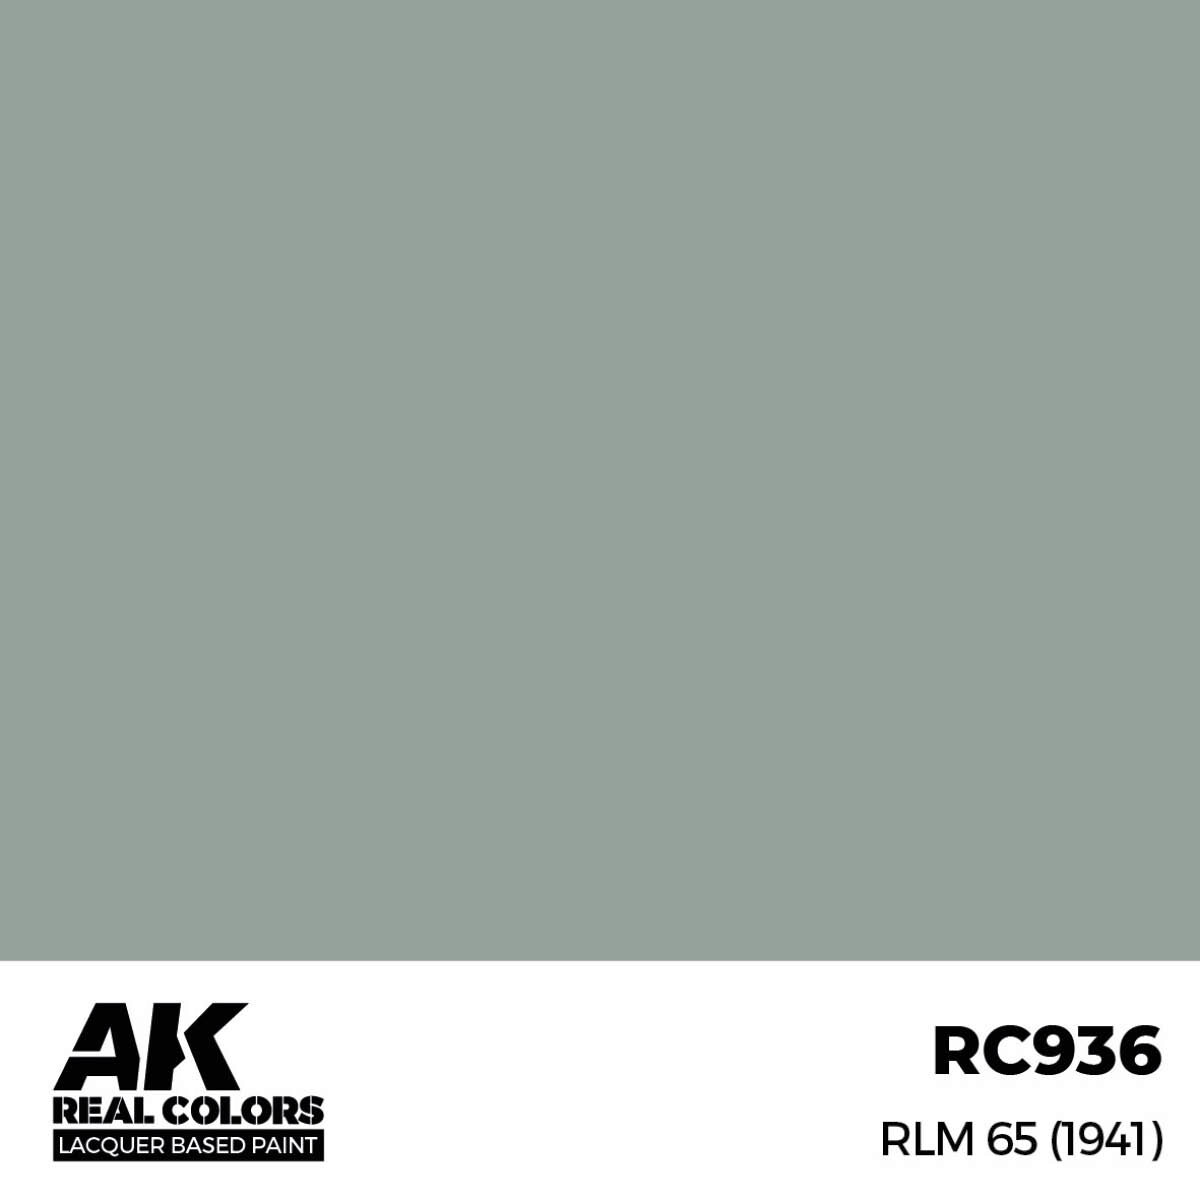 AK RC936 Real Colors RLM 65 (1941) 17 ml.